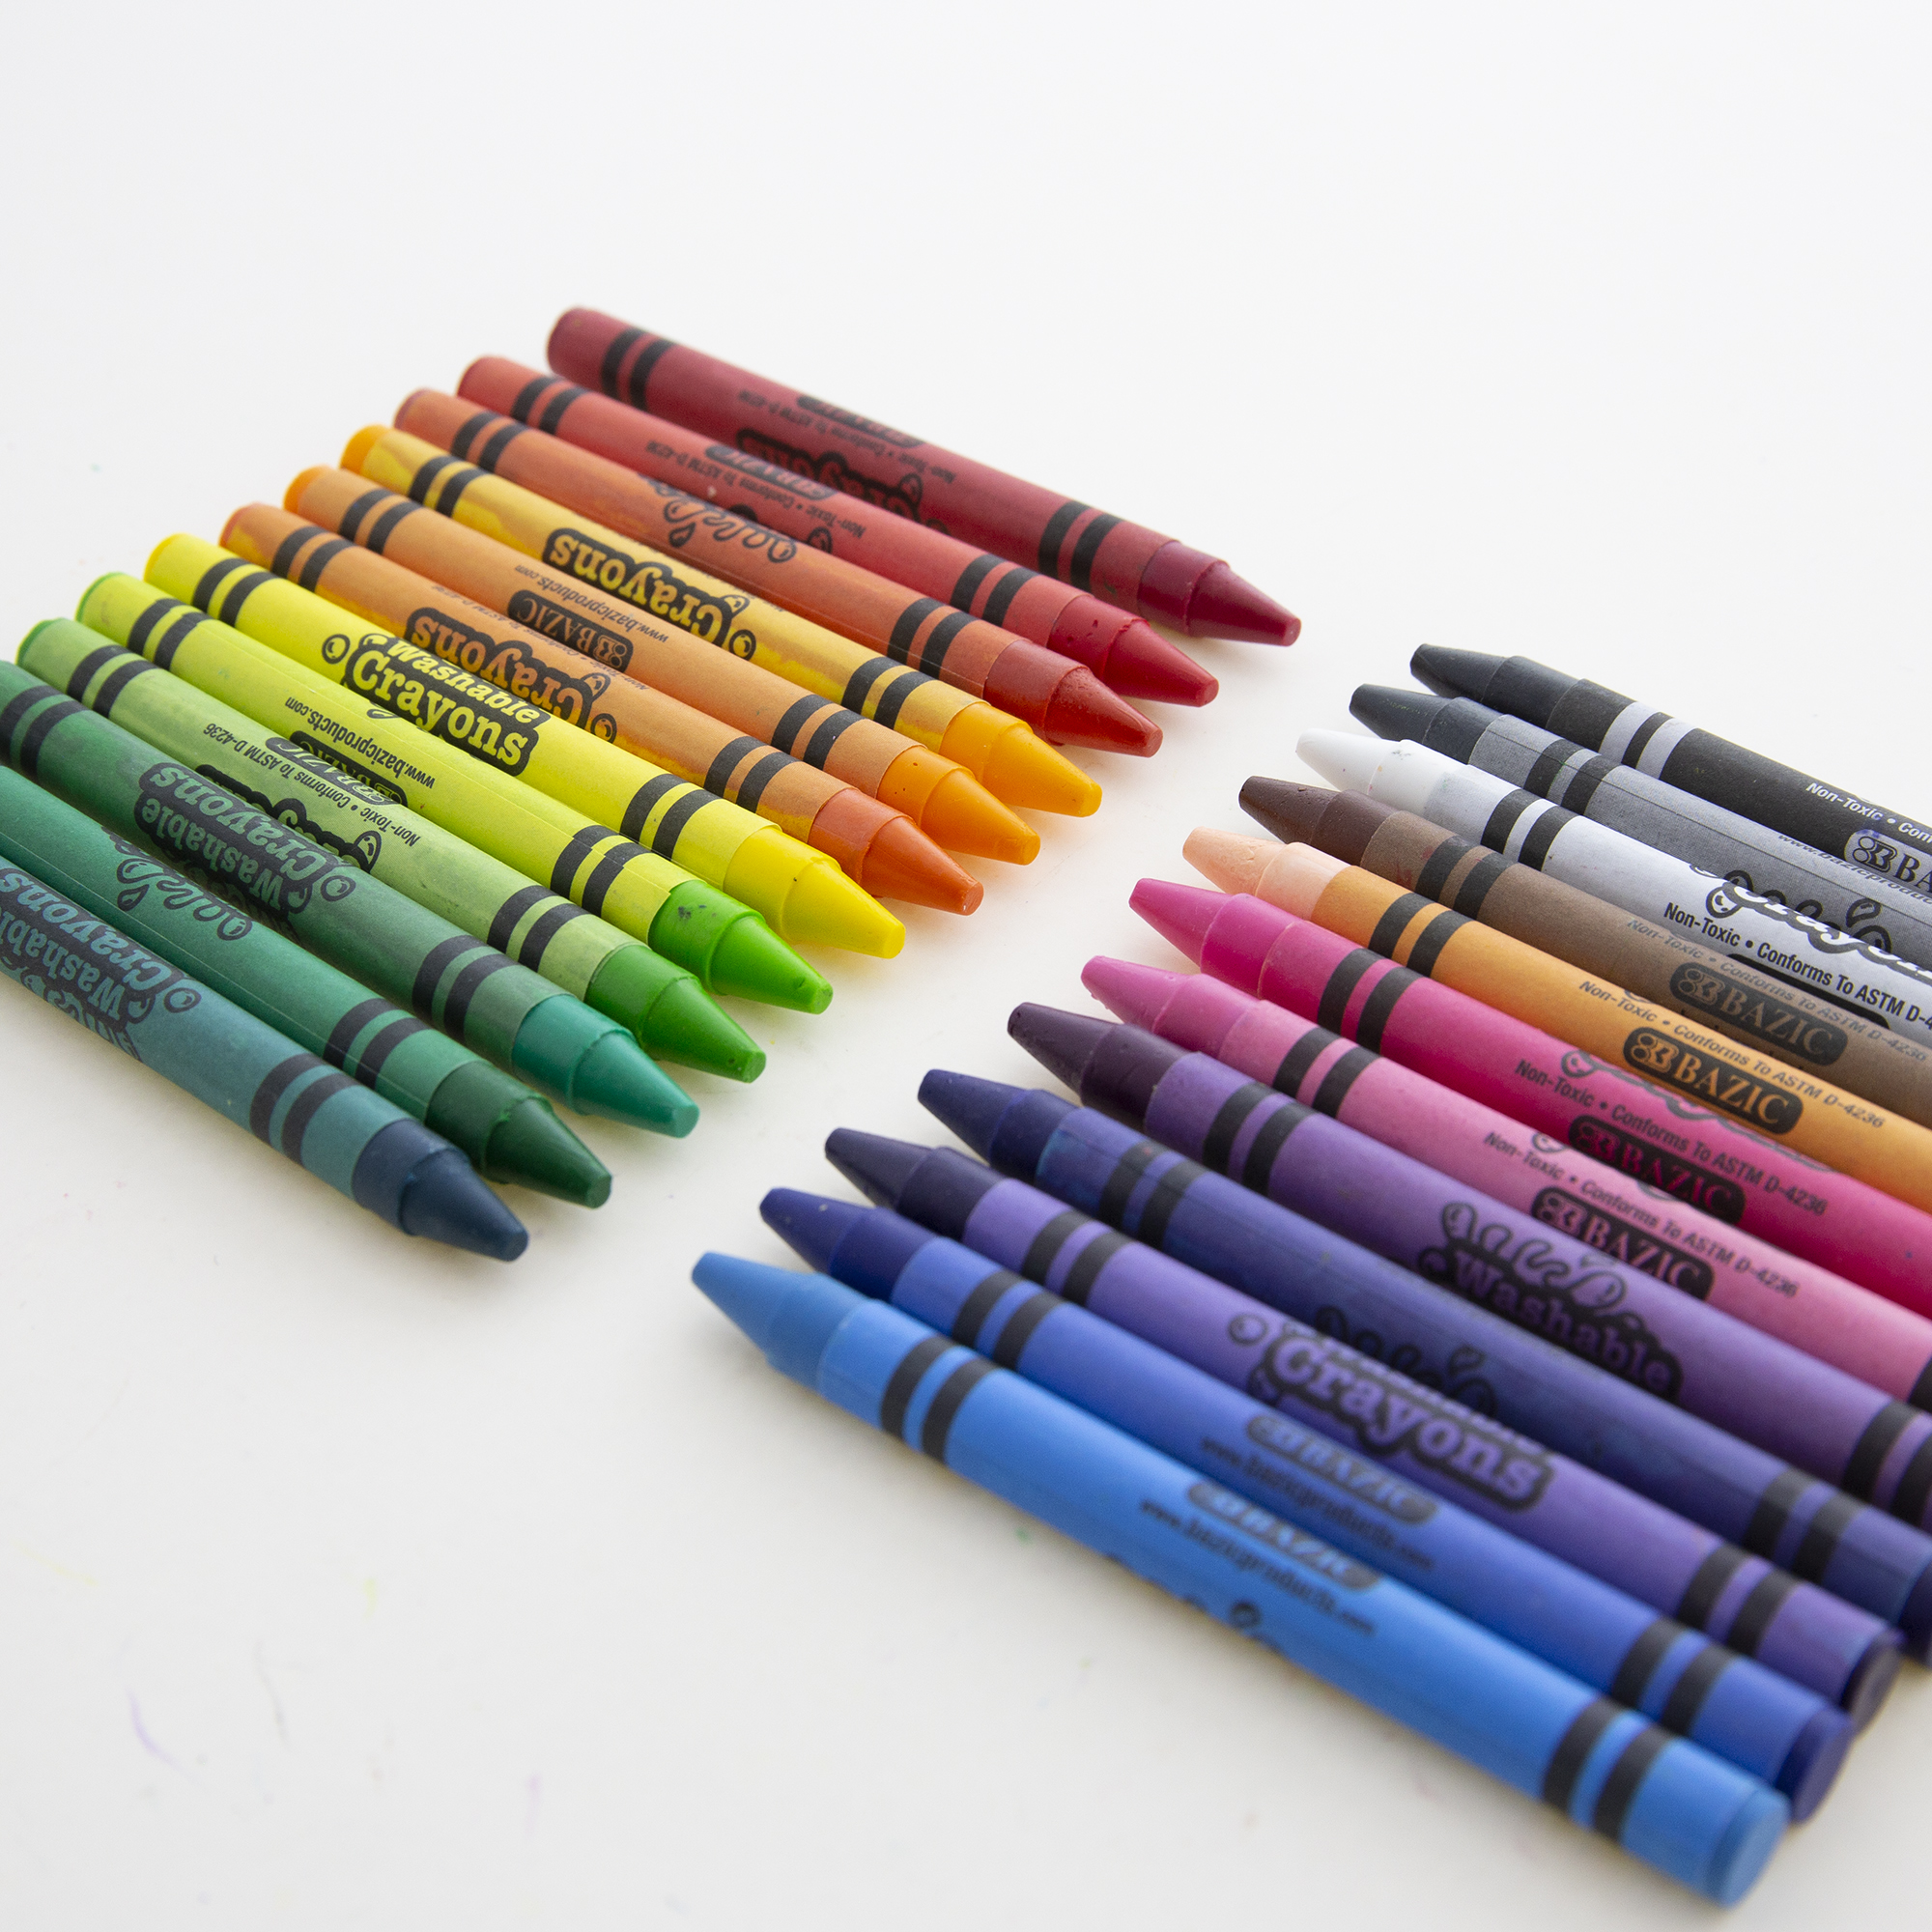 Crayola Construction Paper Crayons 16-Count Vivid Colors Non Toxic